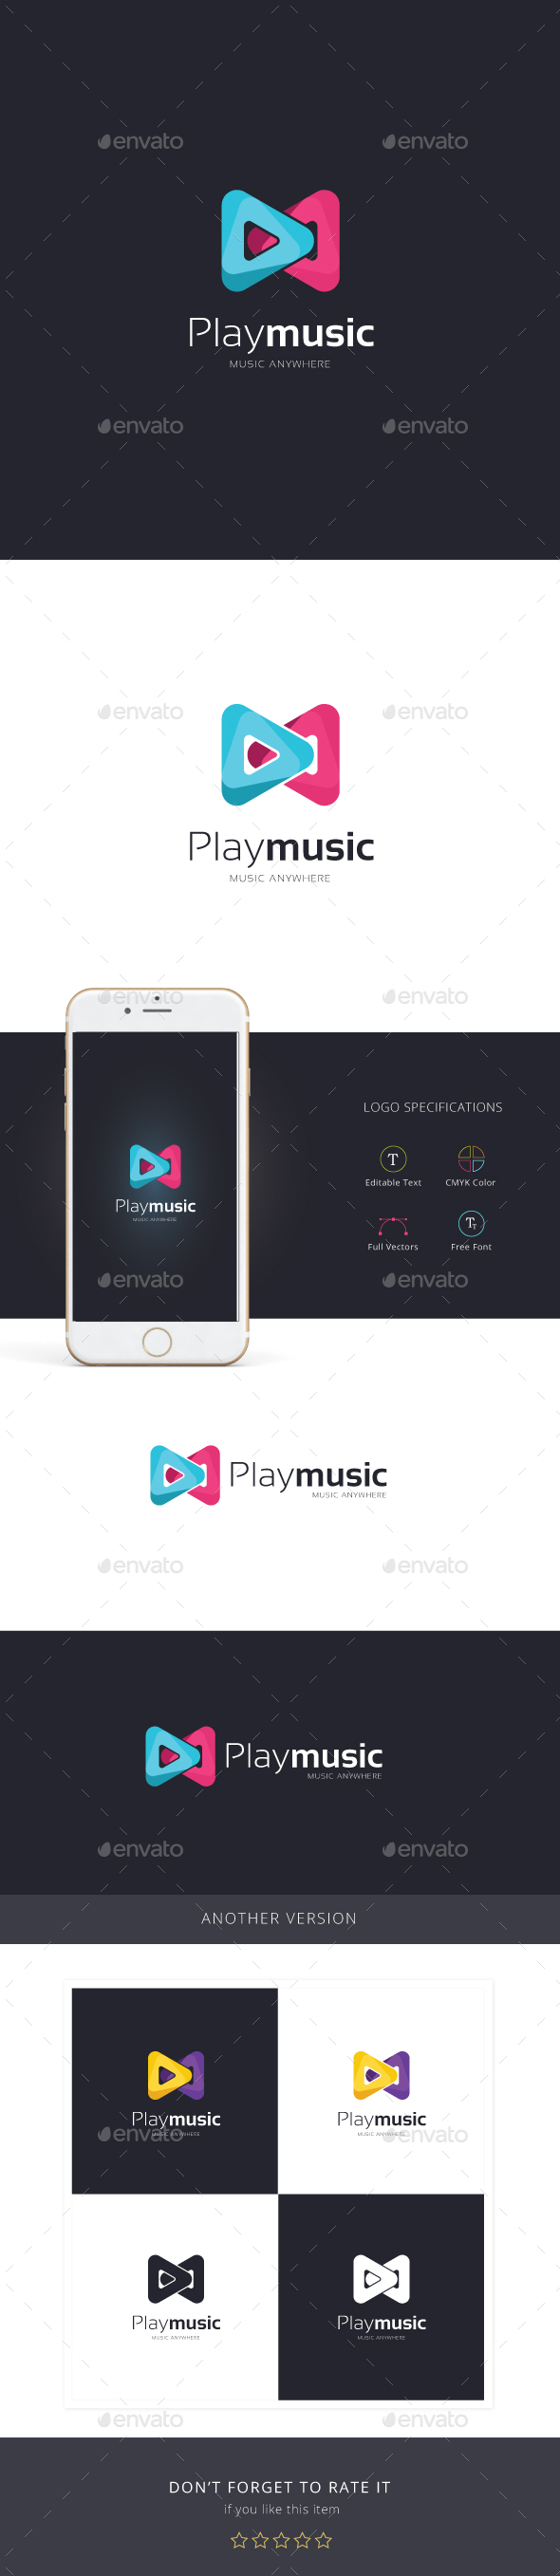 Play Music logo